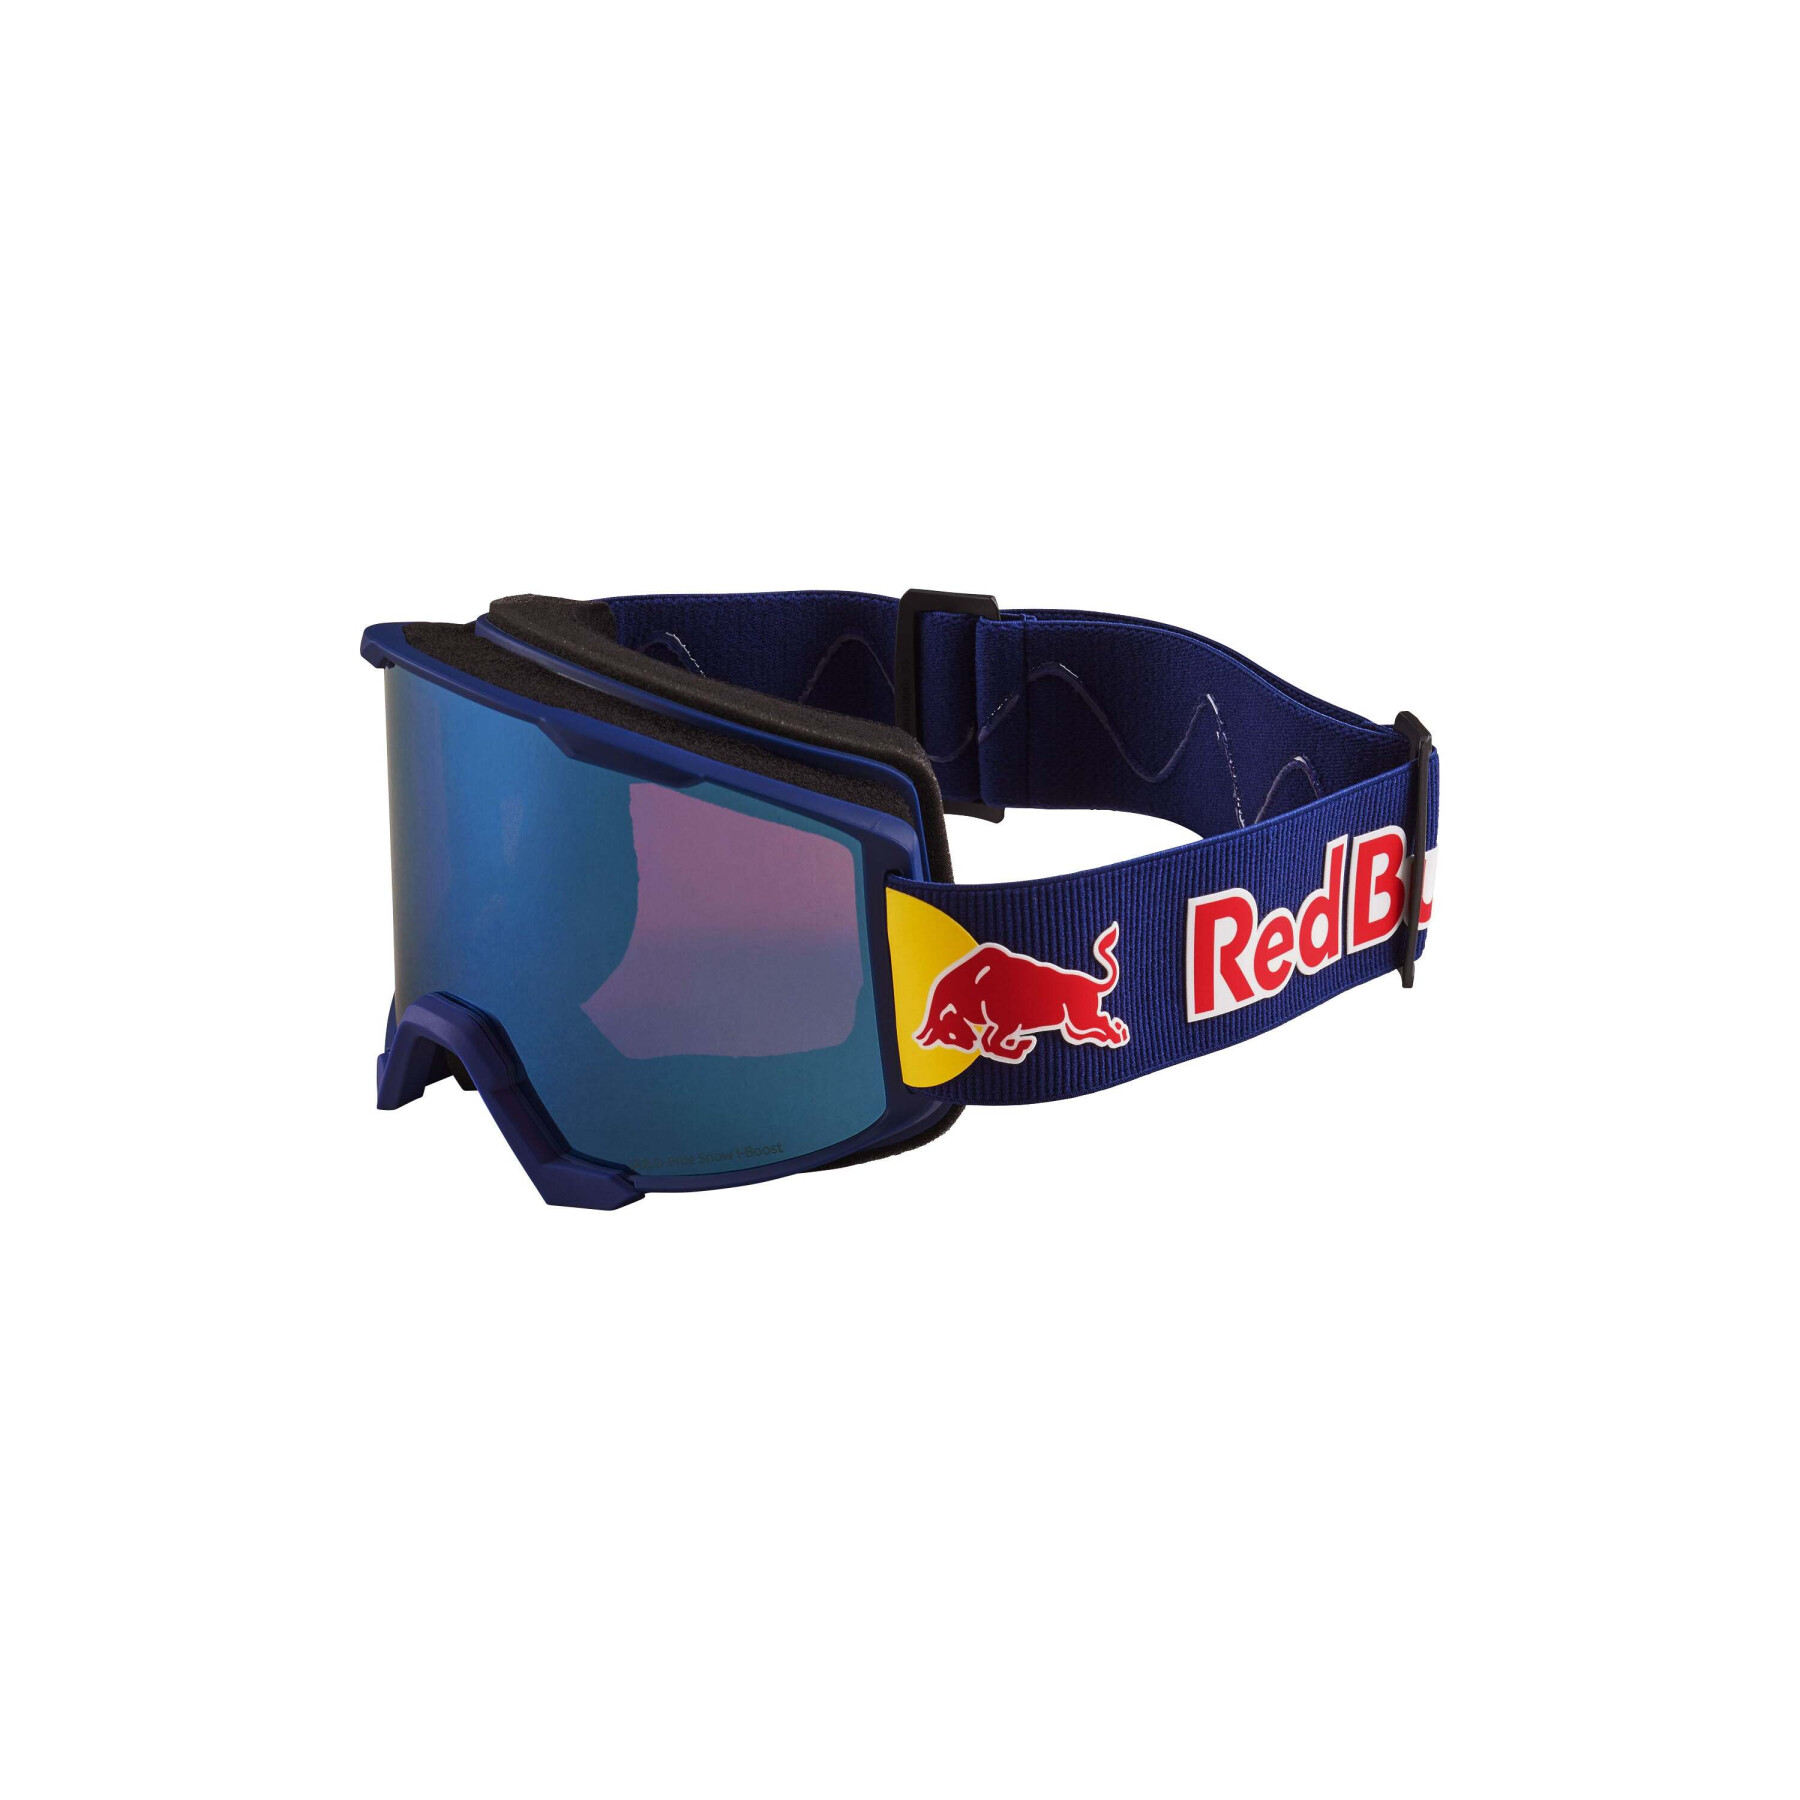 Masque de ski Redbull Spect Eyewear Solo